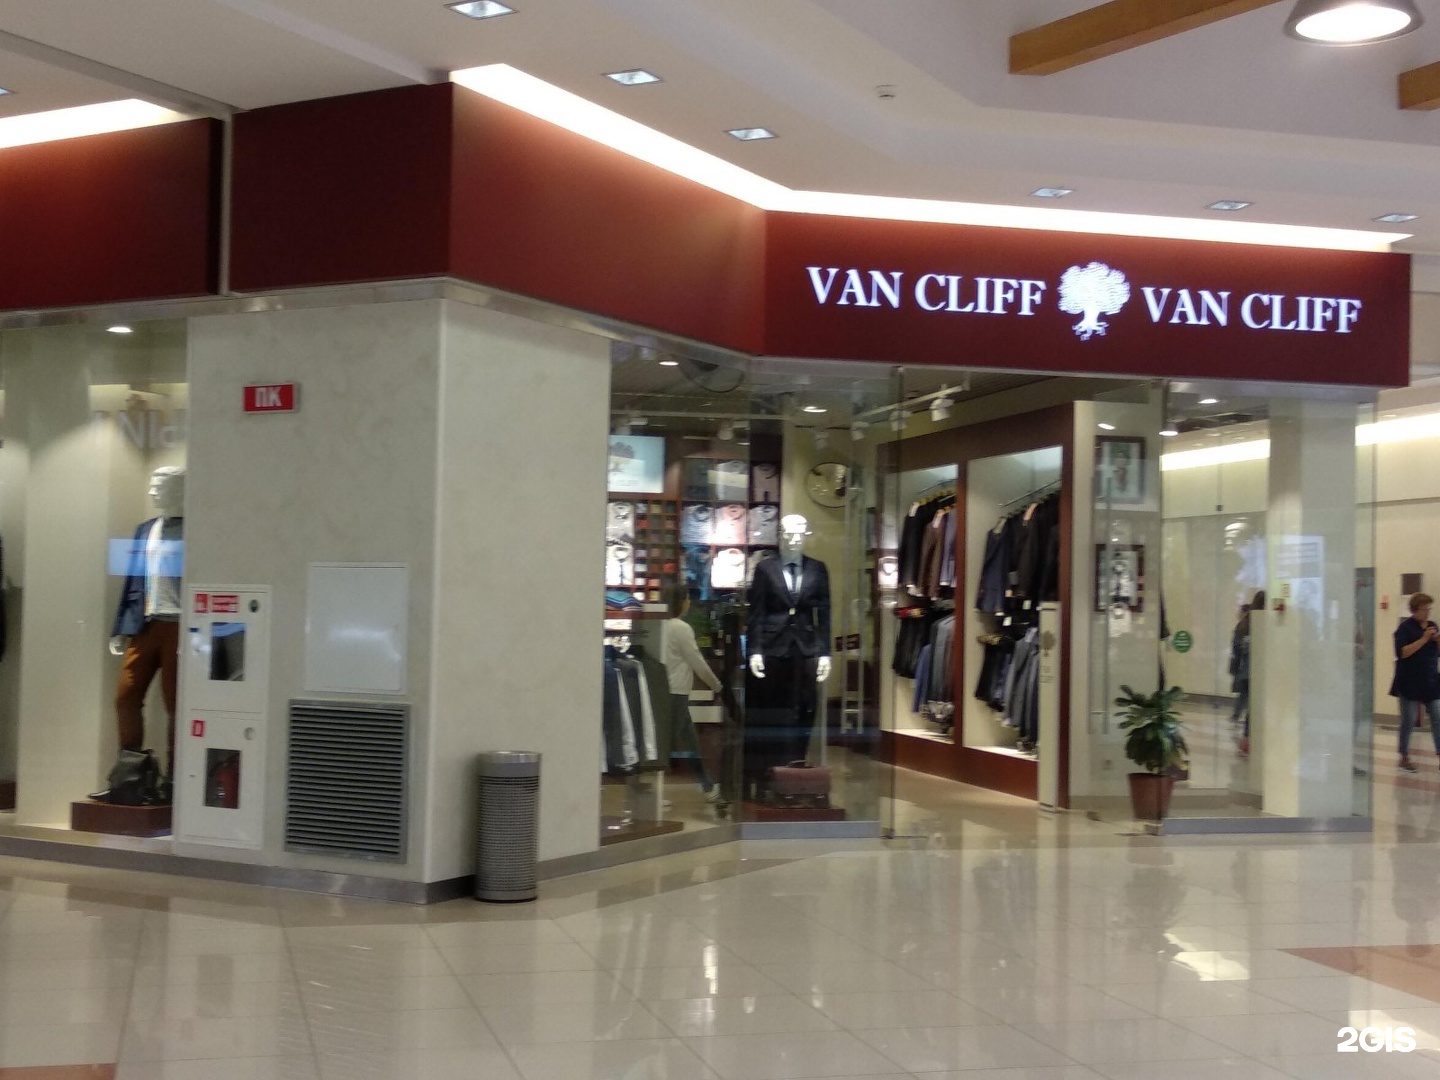 Van Cliff Пенза. Van Cliff магазин мужской одежды Москва. Пальто фирмы van Cliff. Van Cliff фото магазина. Клиф магазин